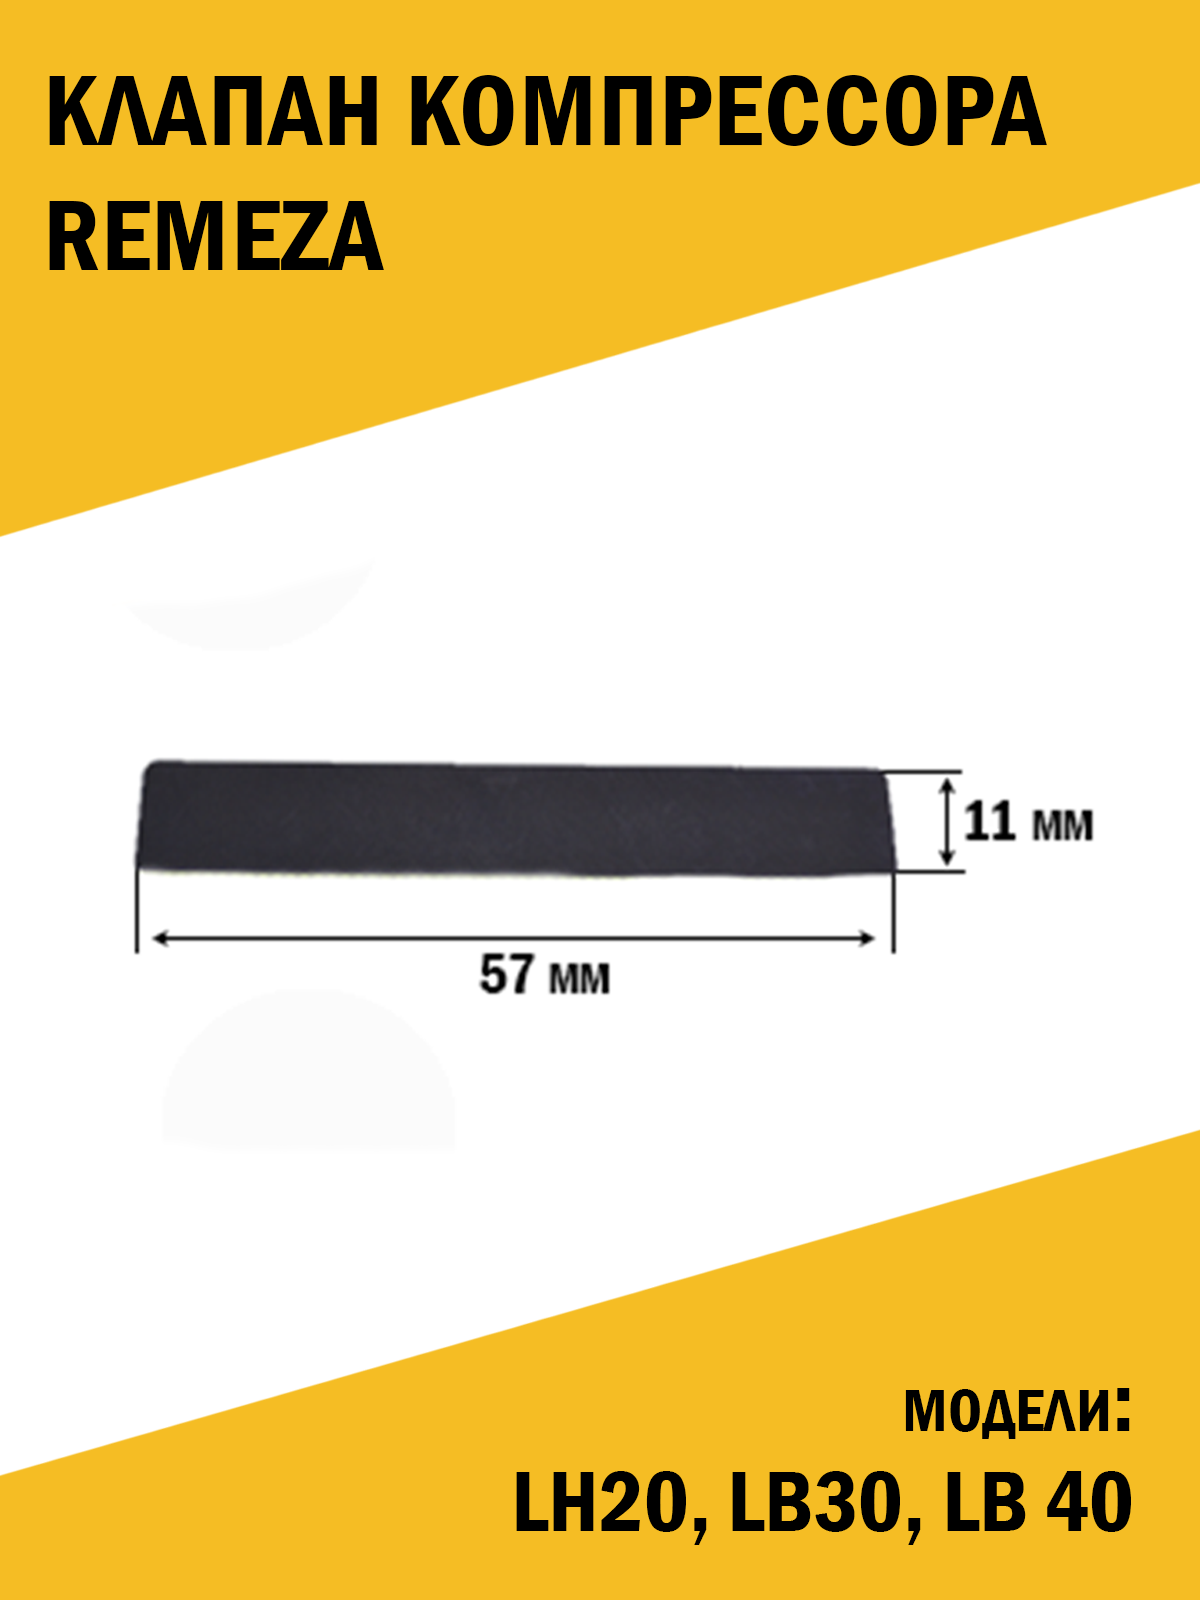 Клапан компрессора Remeza Ремеза LH20 LB30 LB 40 11*57 мм.